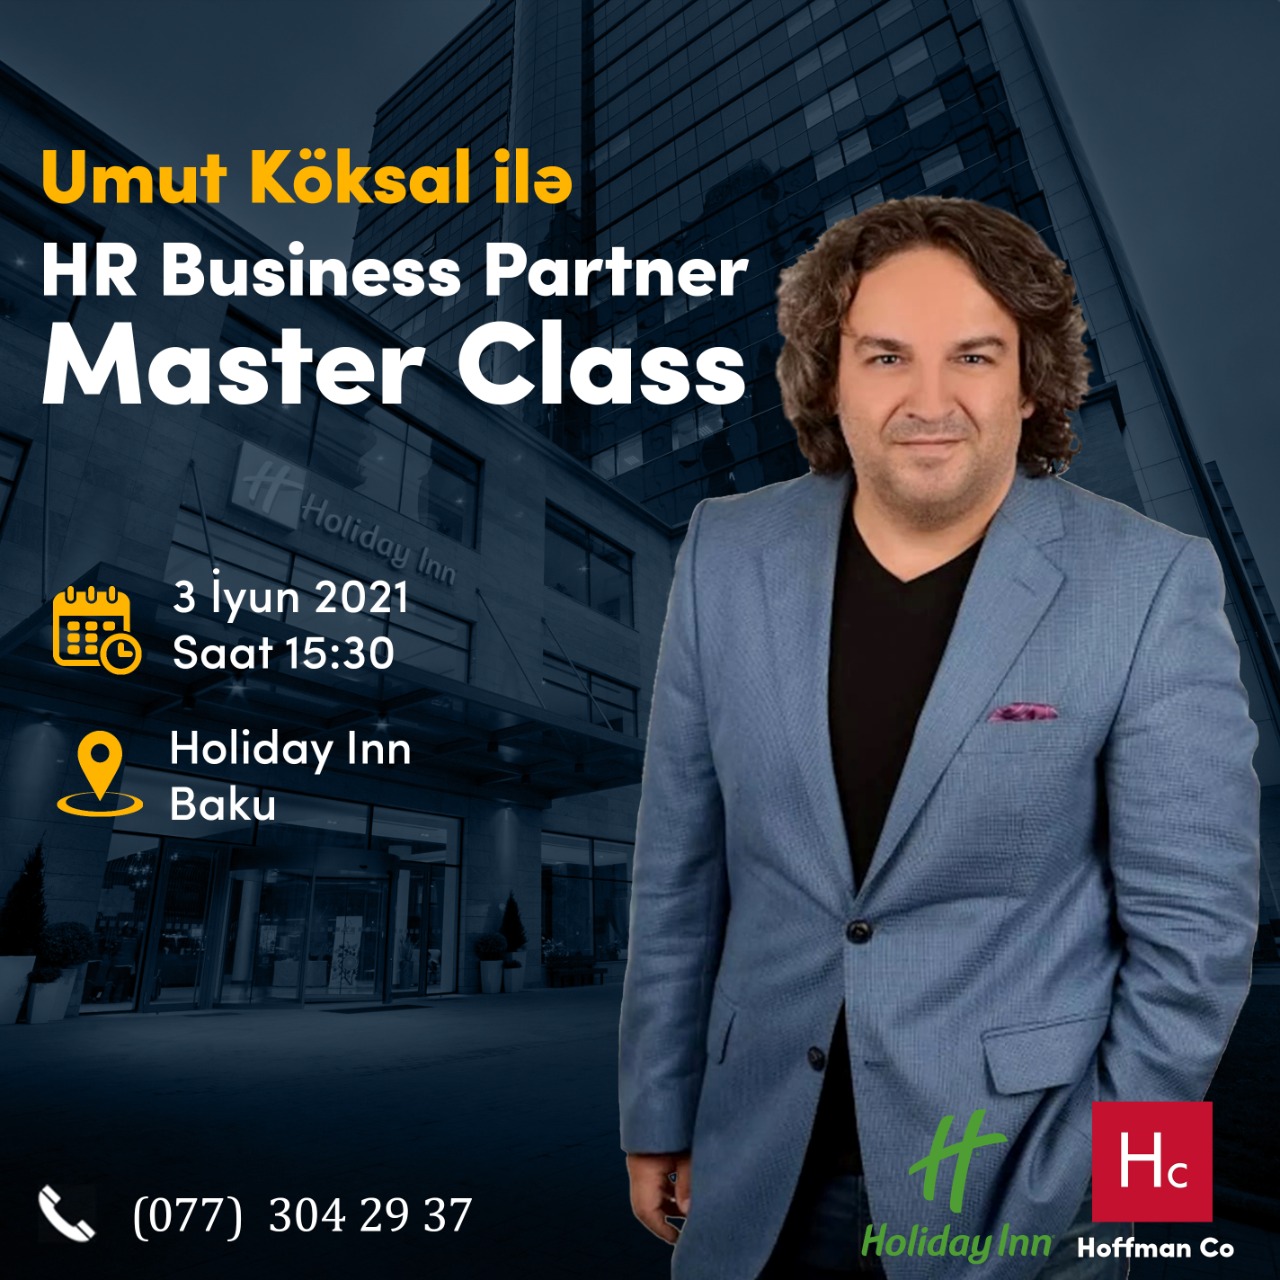 Bakıda "HR Business Partner Master Class" keçiriləcək